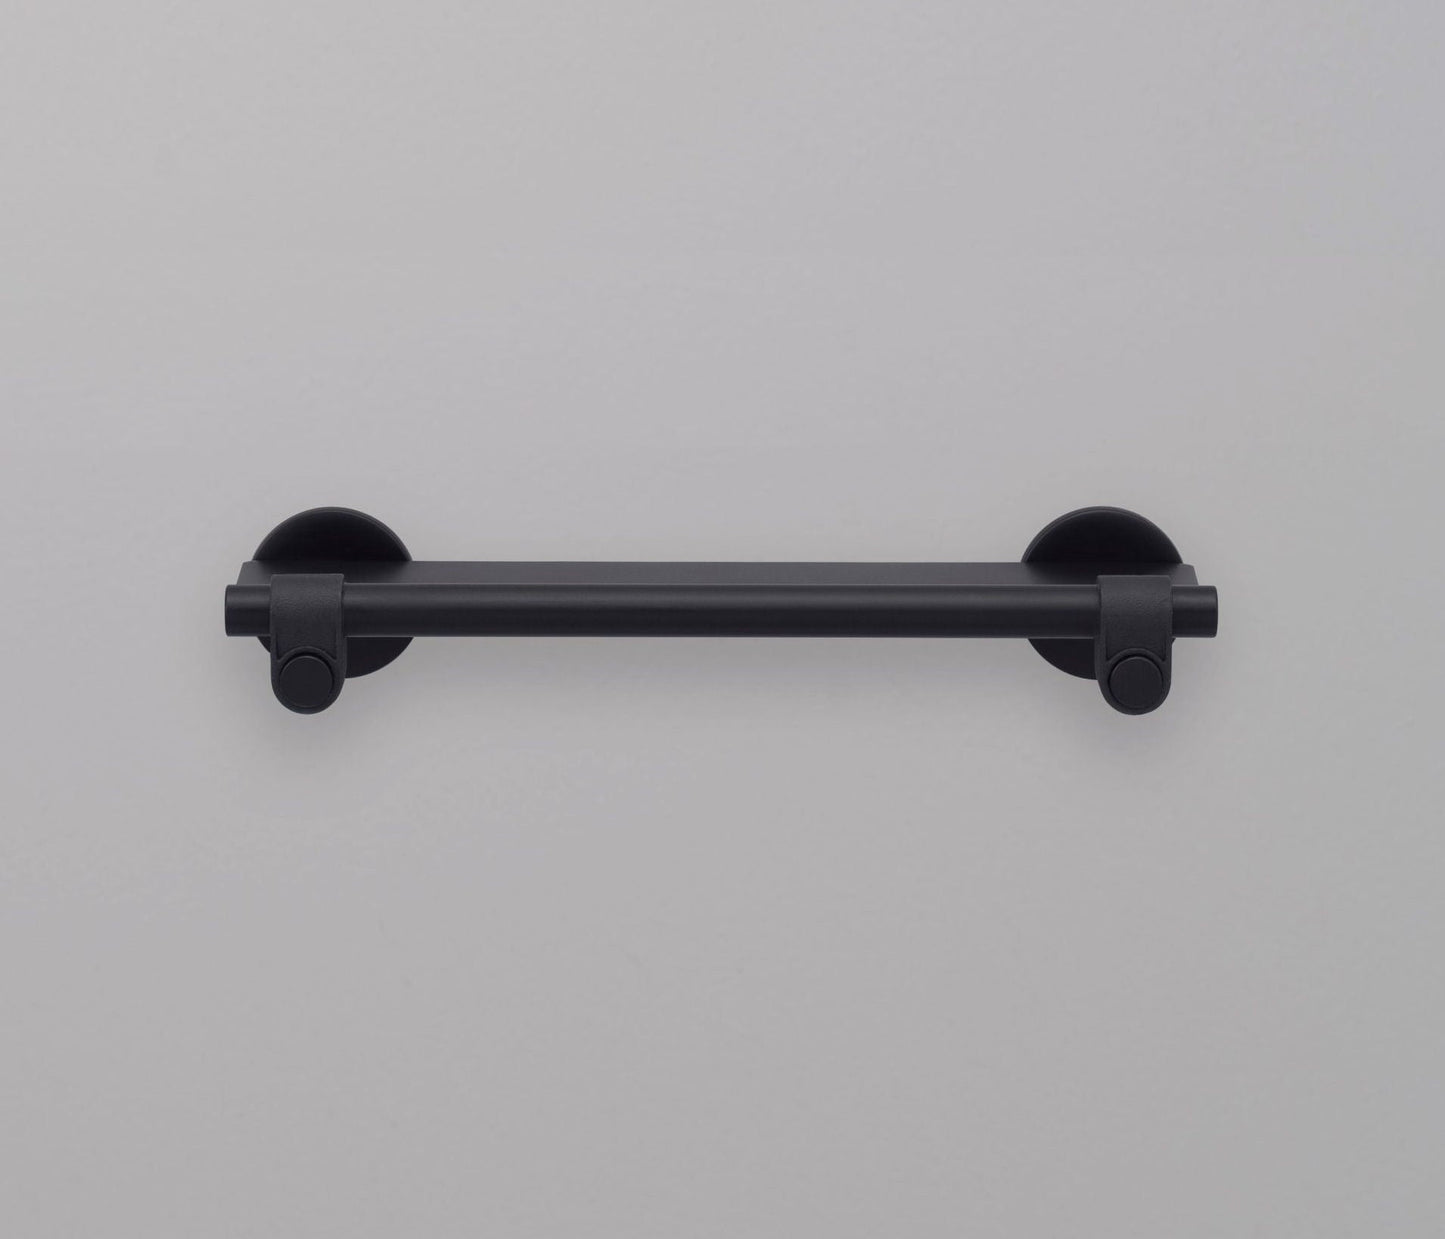 Matt Black Bathroom Cast Shelf Small / Welders Black - |VESIMI Design| Luxury and Rustic bathrooms online